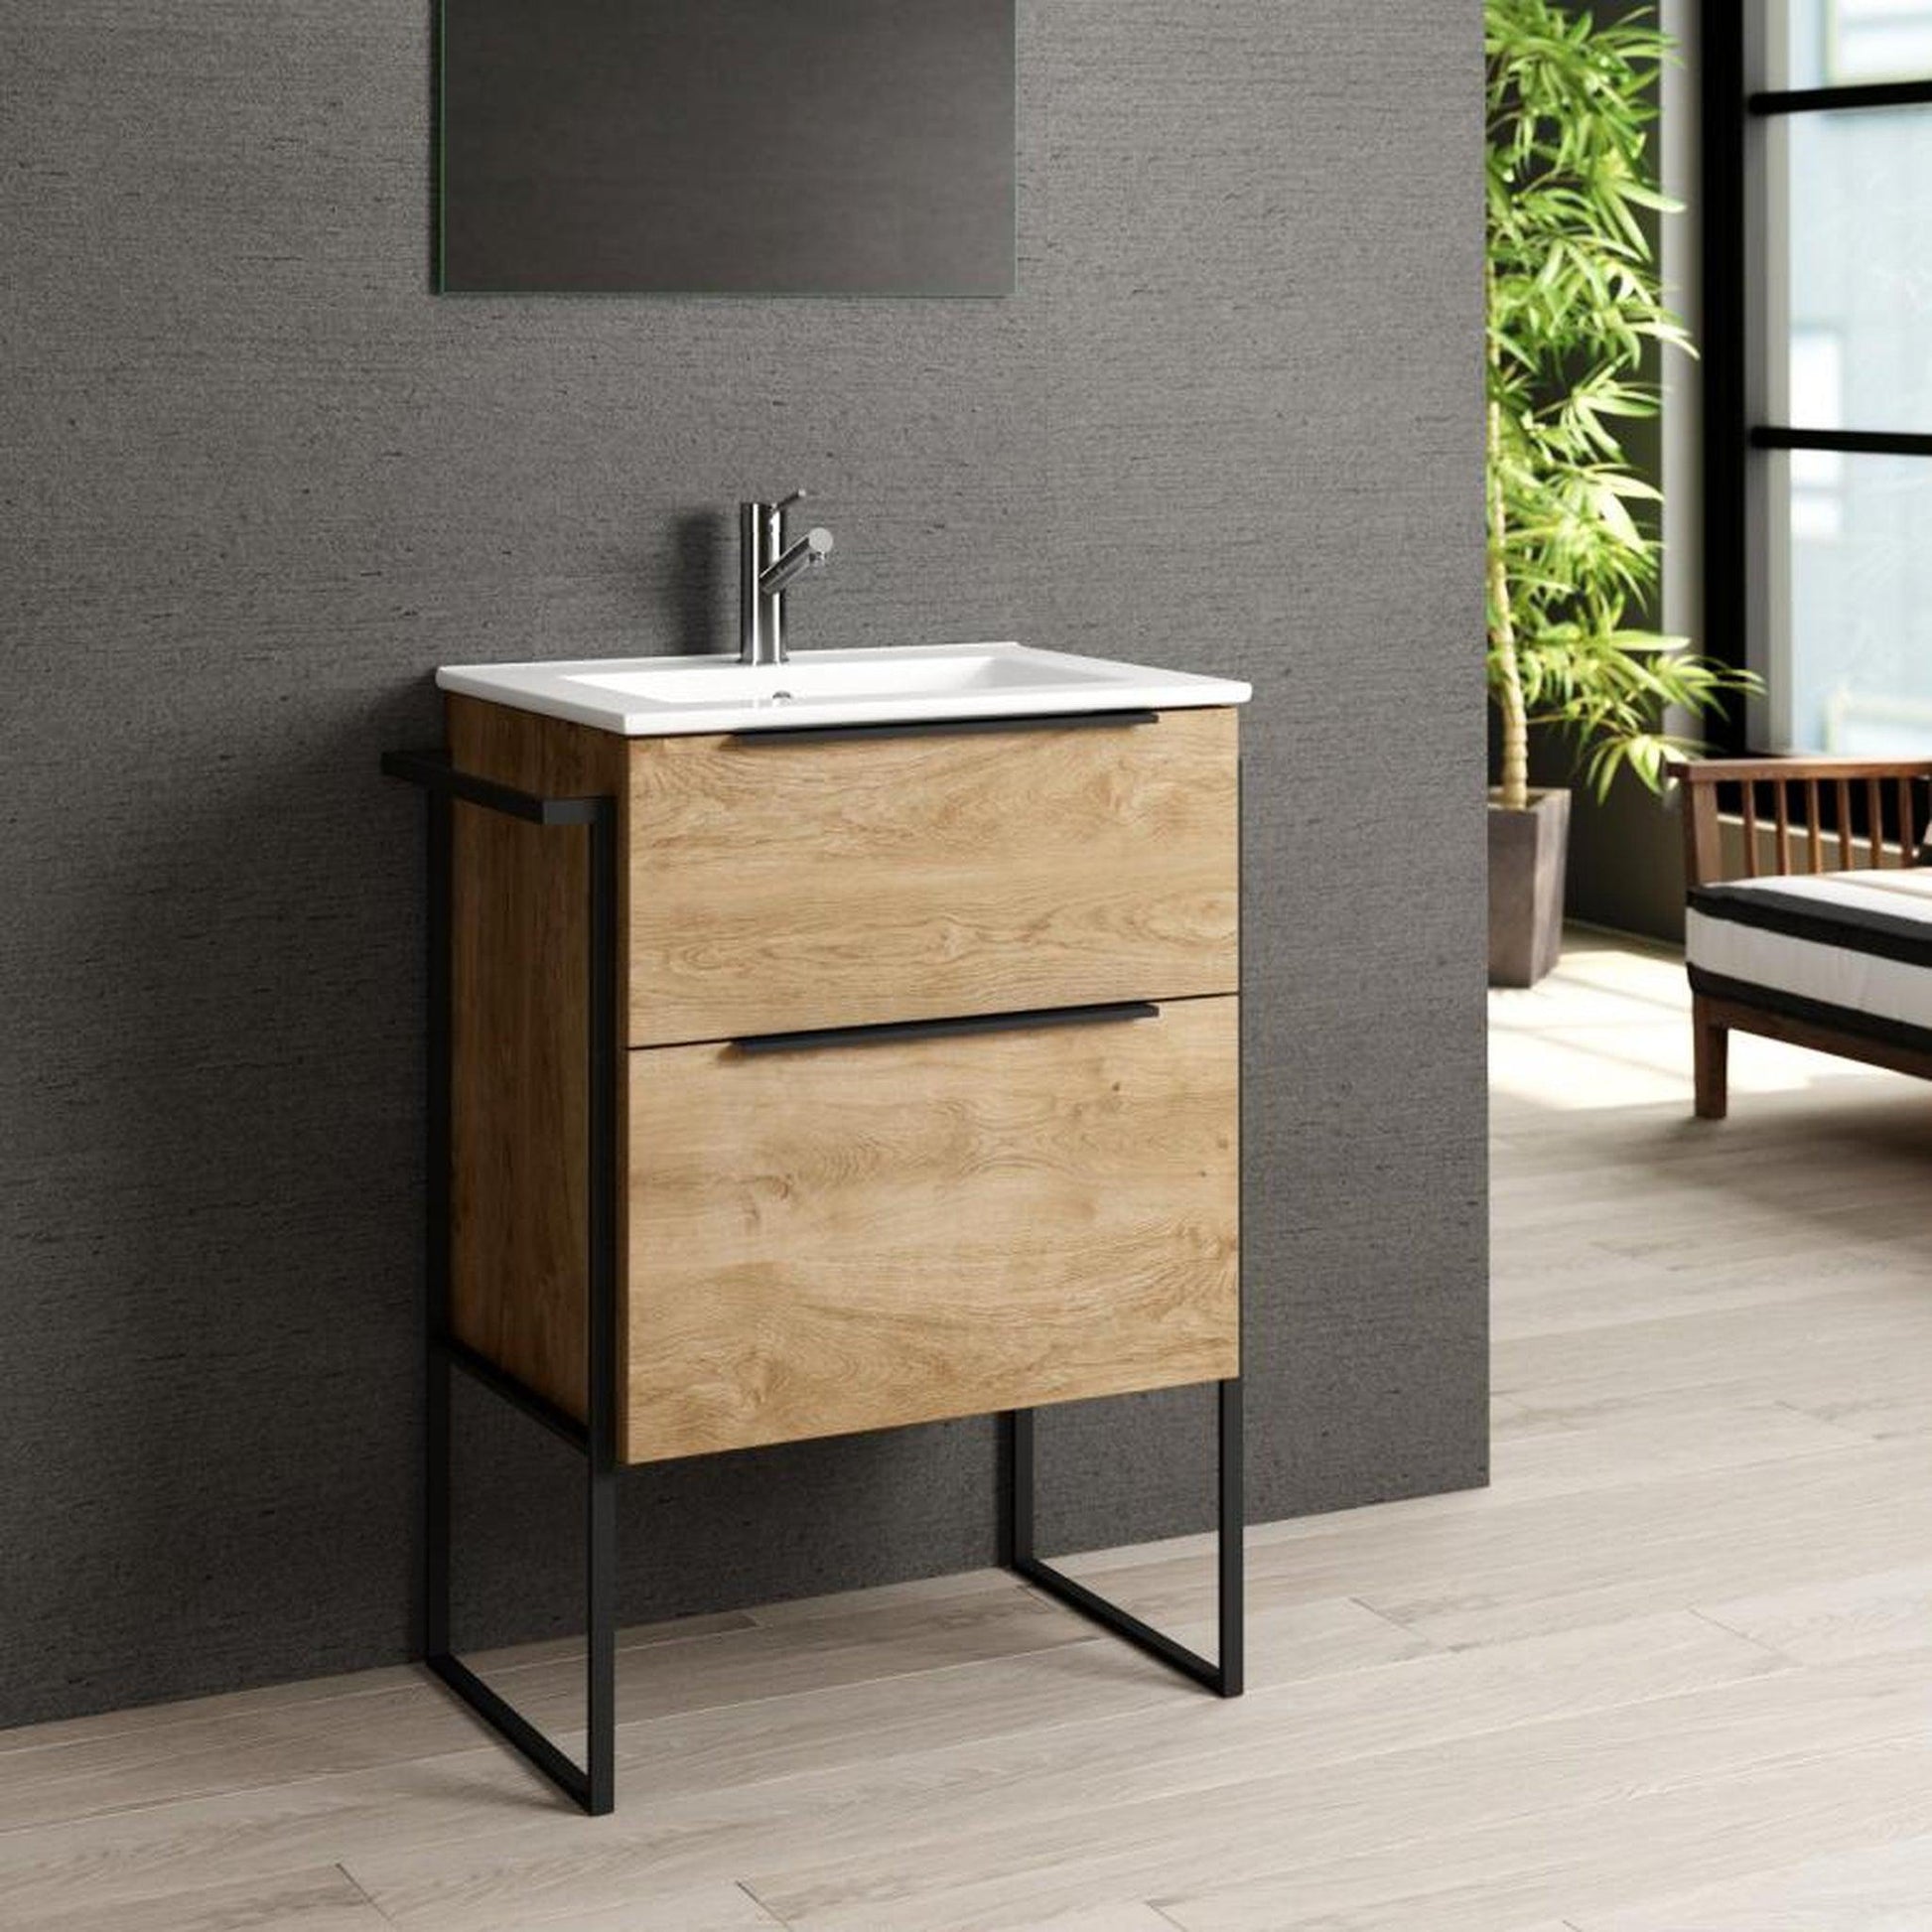 Eviva Marina 24” x 34” Medium Oak Freestanding Bathroom Vanity With White Integrated Porcelain Sink